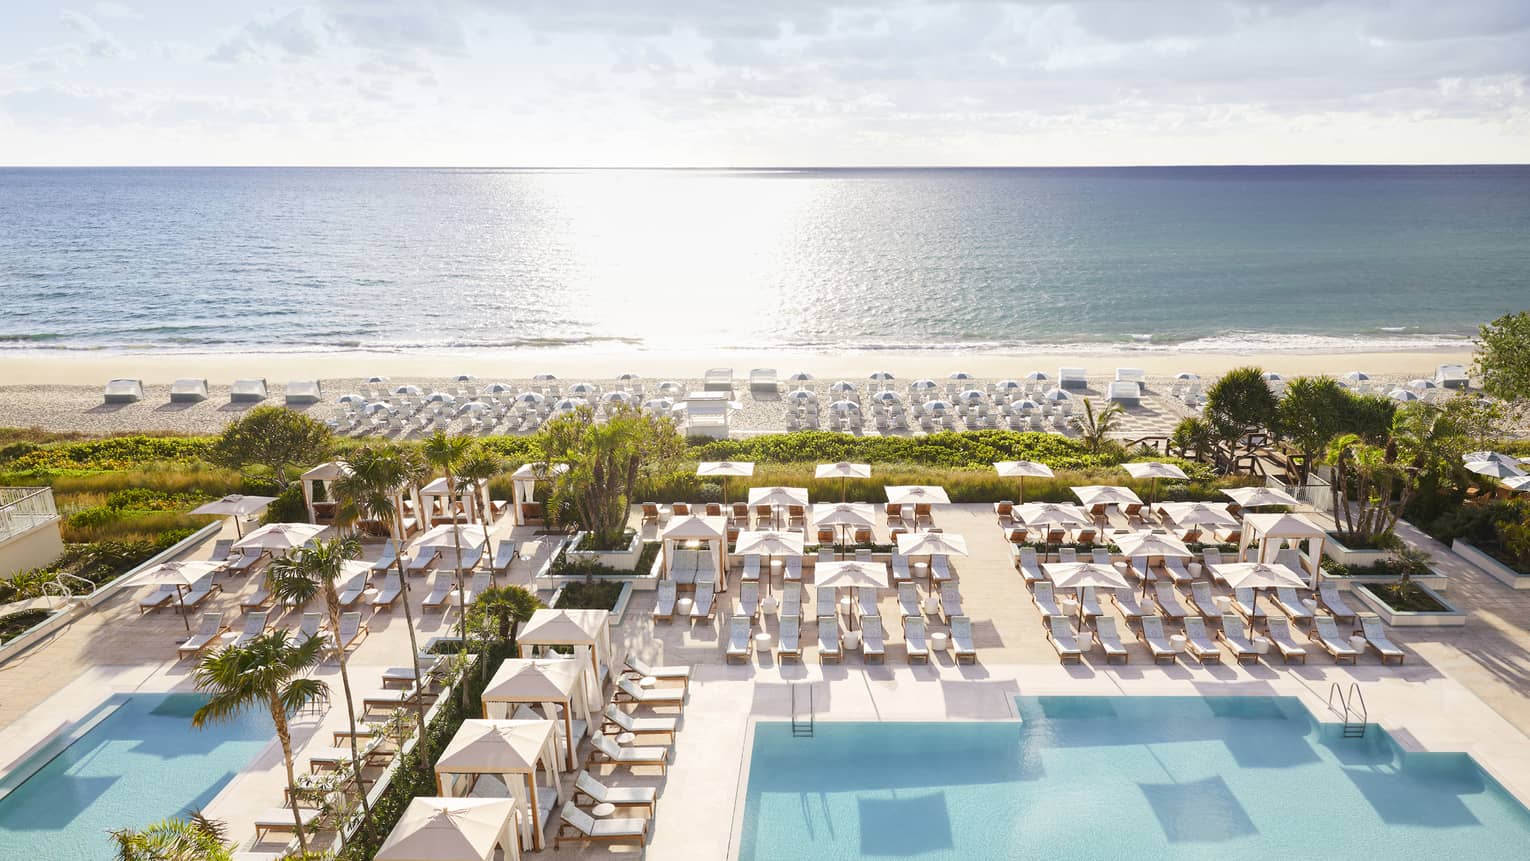 Aerial view of sprawling Four Seasons Resort Palm Beach pool, patio and beach by ocean